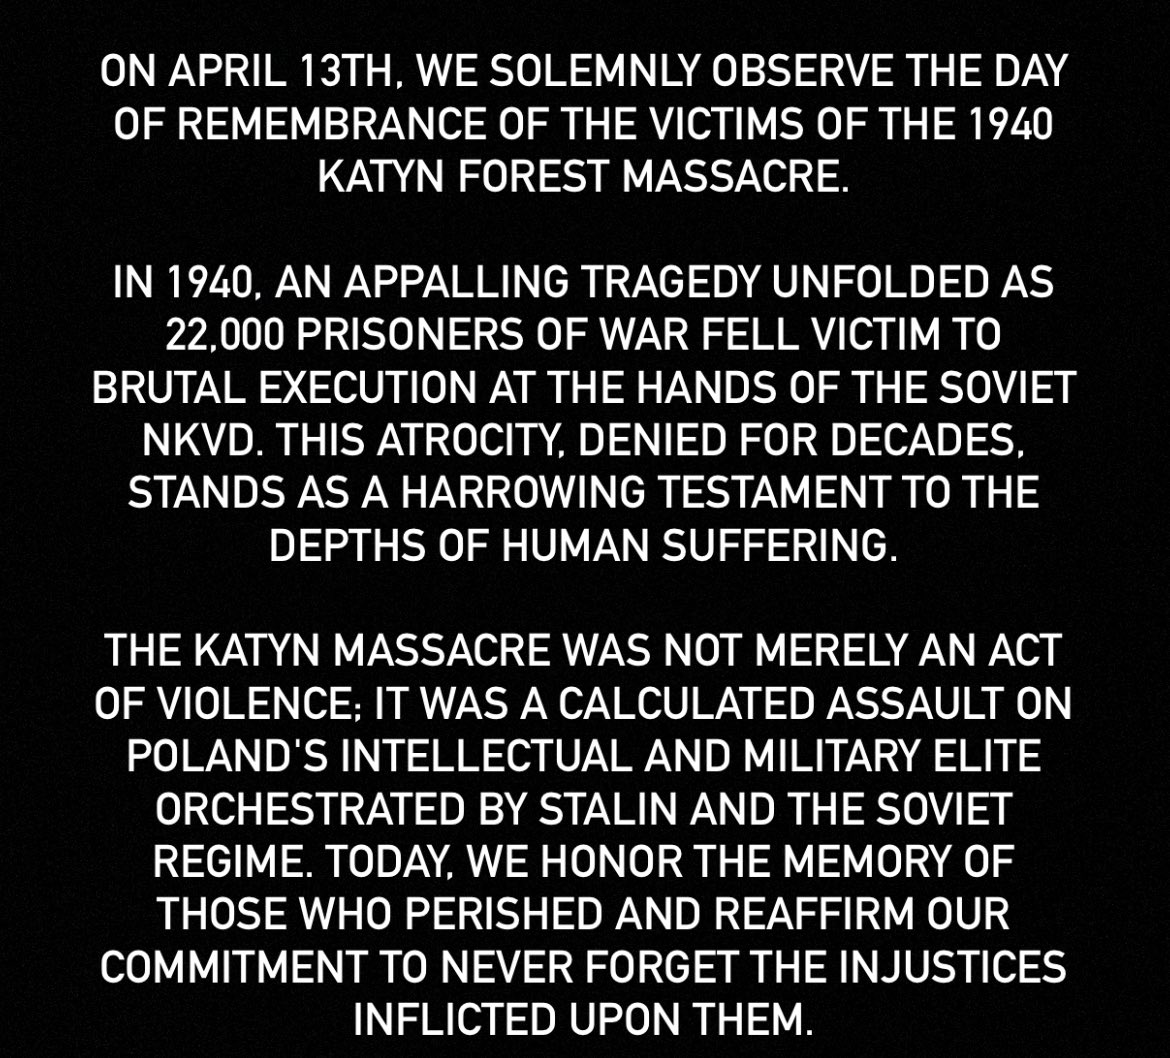 On April 13th, we solemnly observe the Day of Remembrance of the Victims of the 1940 Katyn Forest Massacre.
#warsaw #warszawa #poland #polska #katyn #katynmassacre #sovietunion #sovietcrime